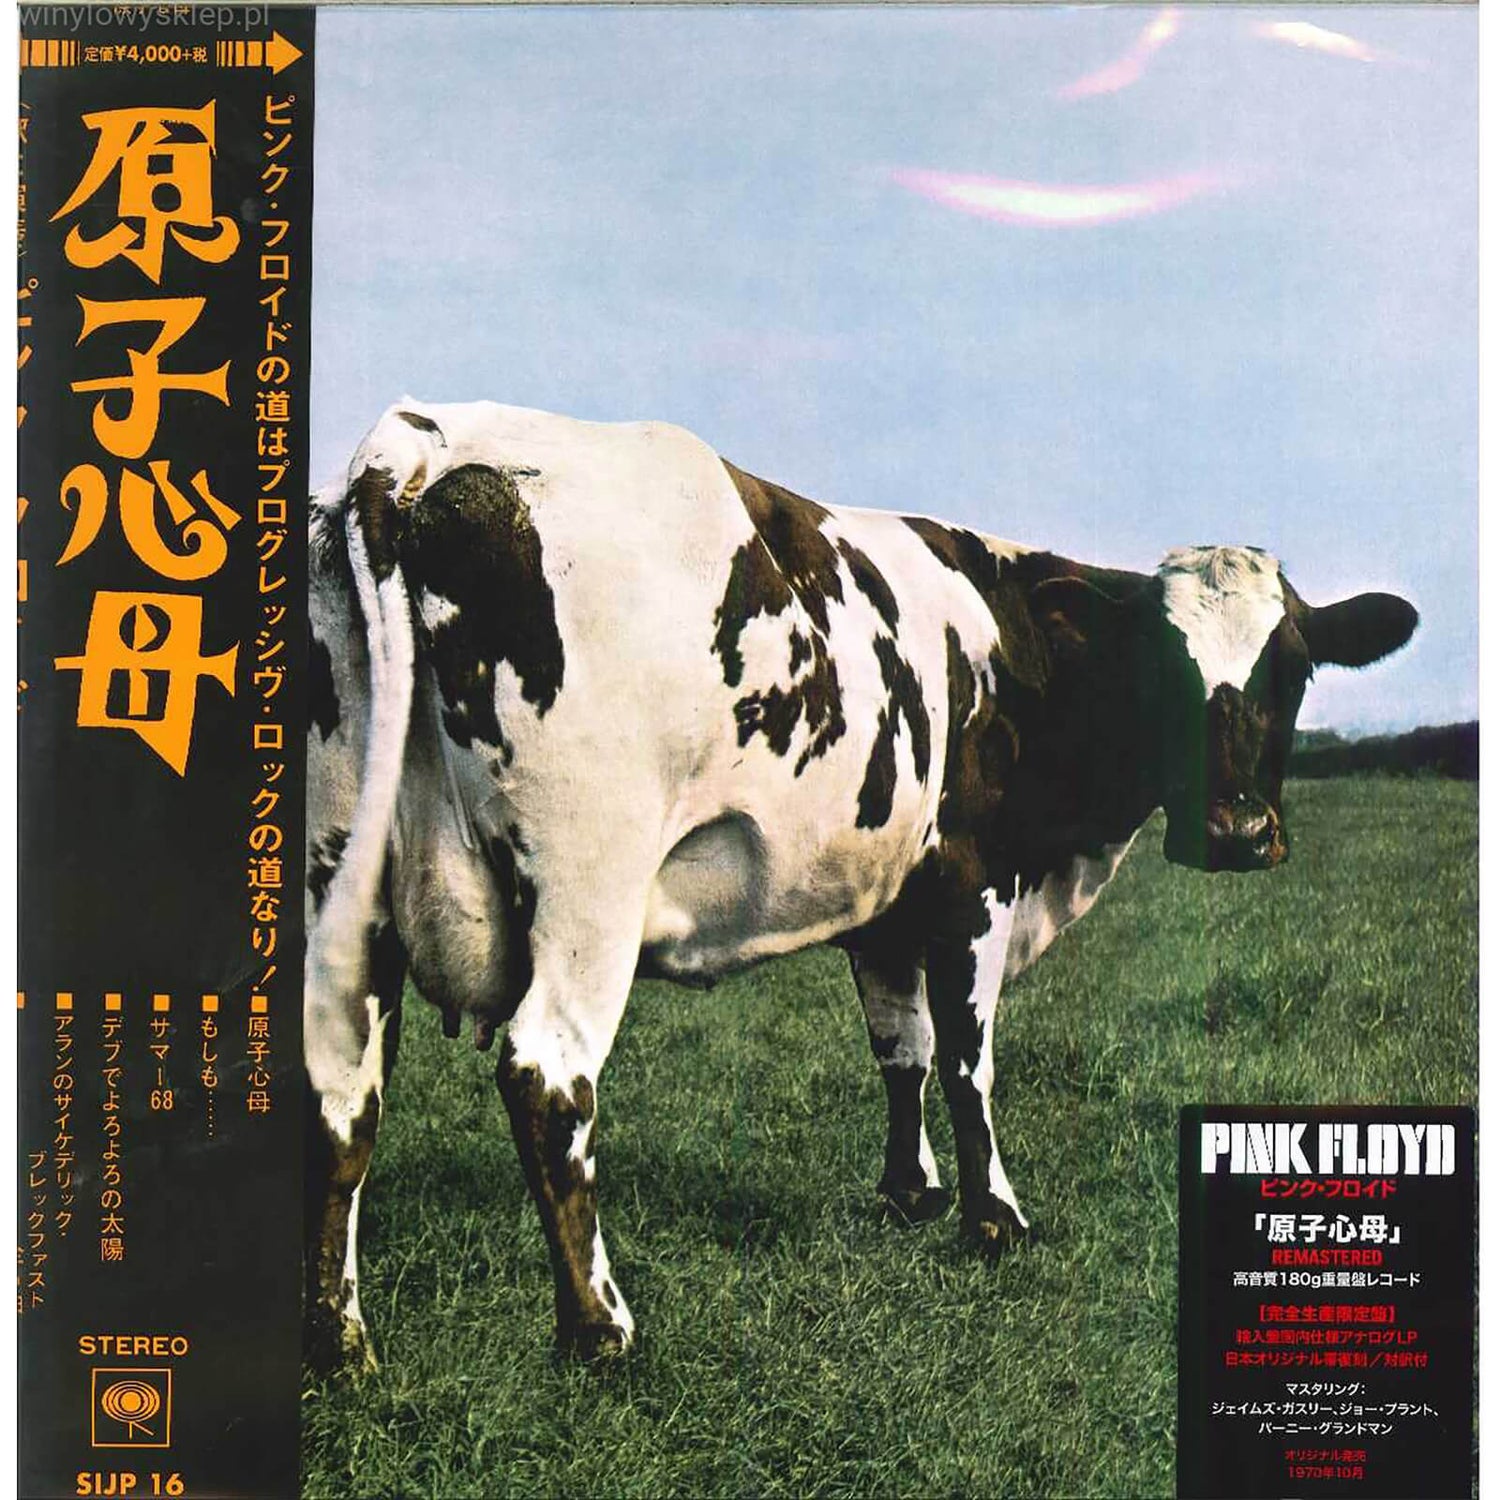 Pink Floyd - Atom Heart Mother Vinyl Japanese Edition